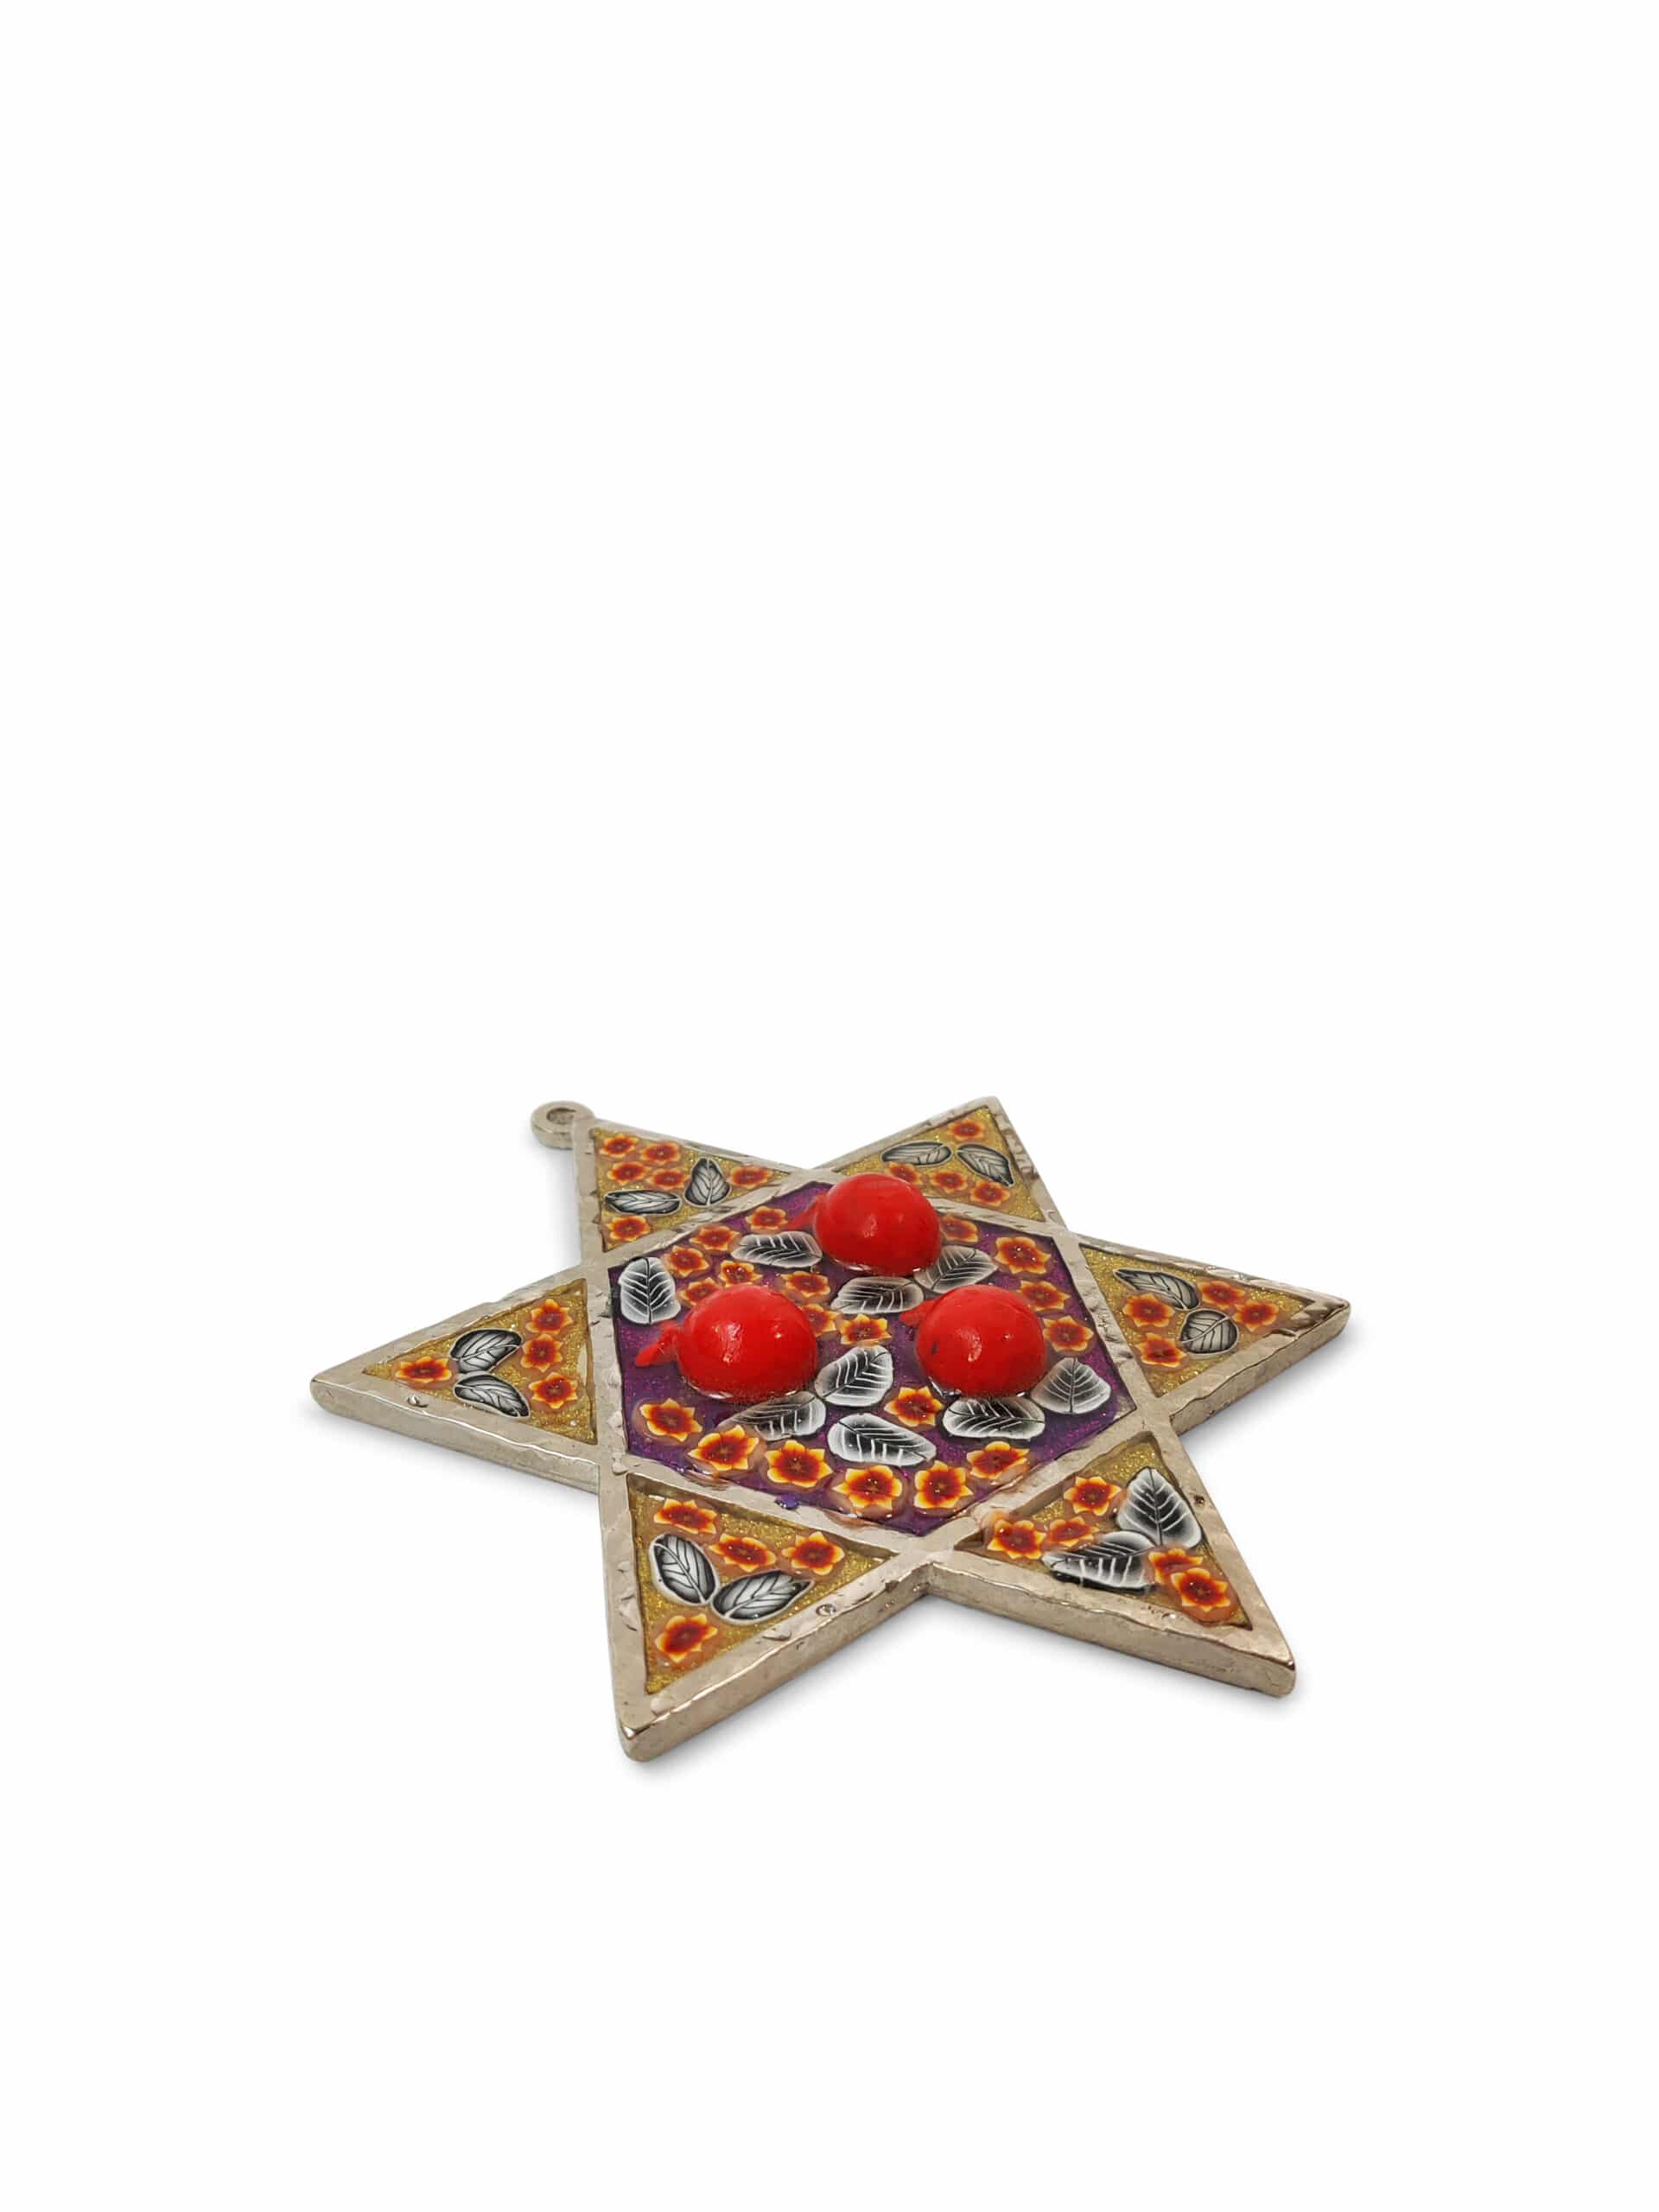 Multicolored Star of David with Three Pomegranate Mobile